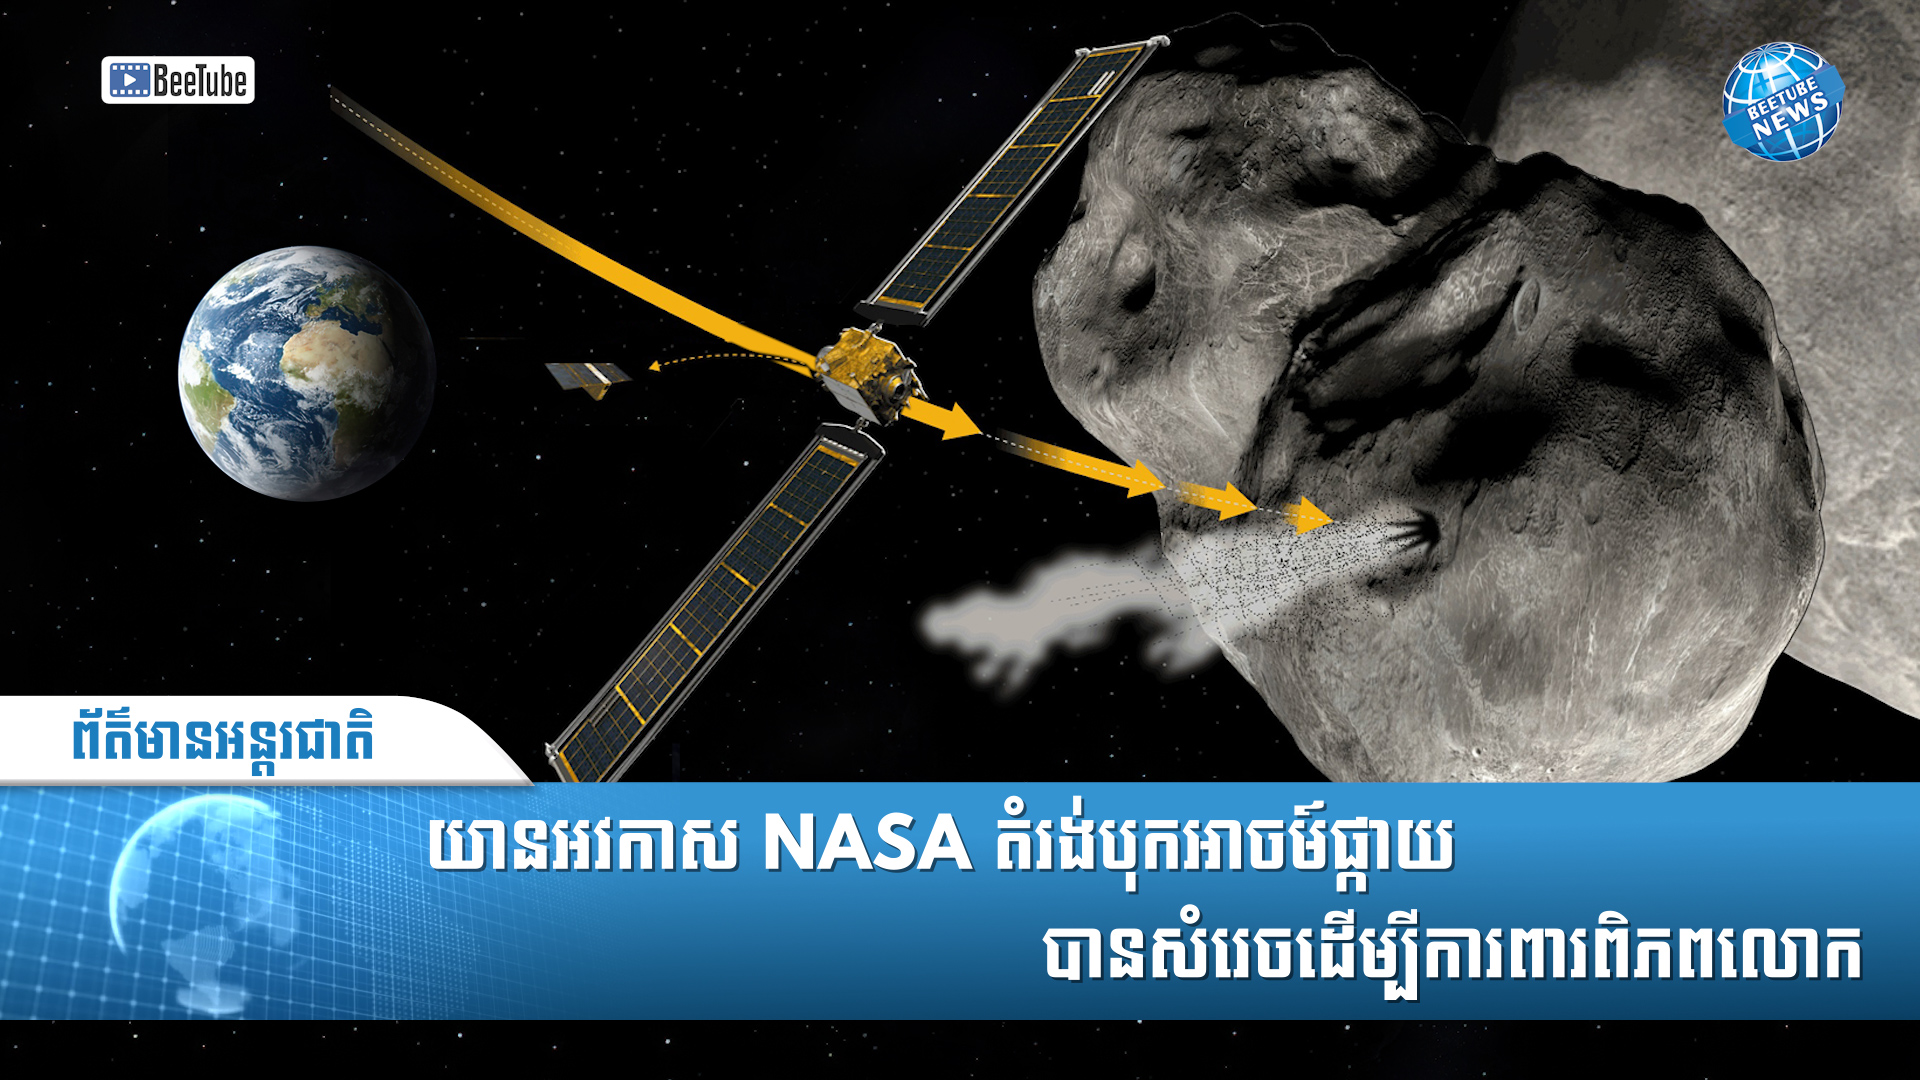 (Video) យានអវកាស NASA តម្រង់បុកអាចម៍ផ្កាយបានសម្រេចដើម្បីការពារពិភពលោក | BeeTube News